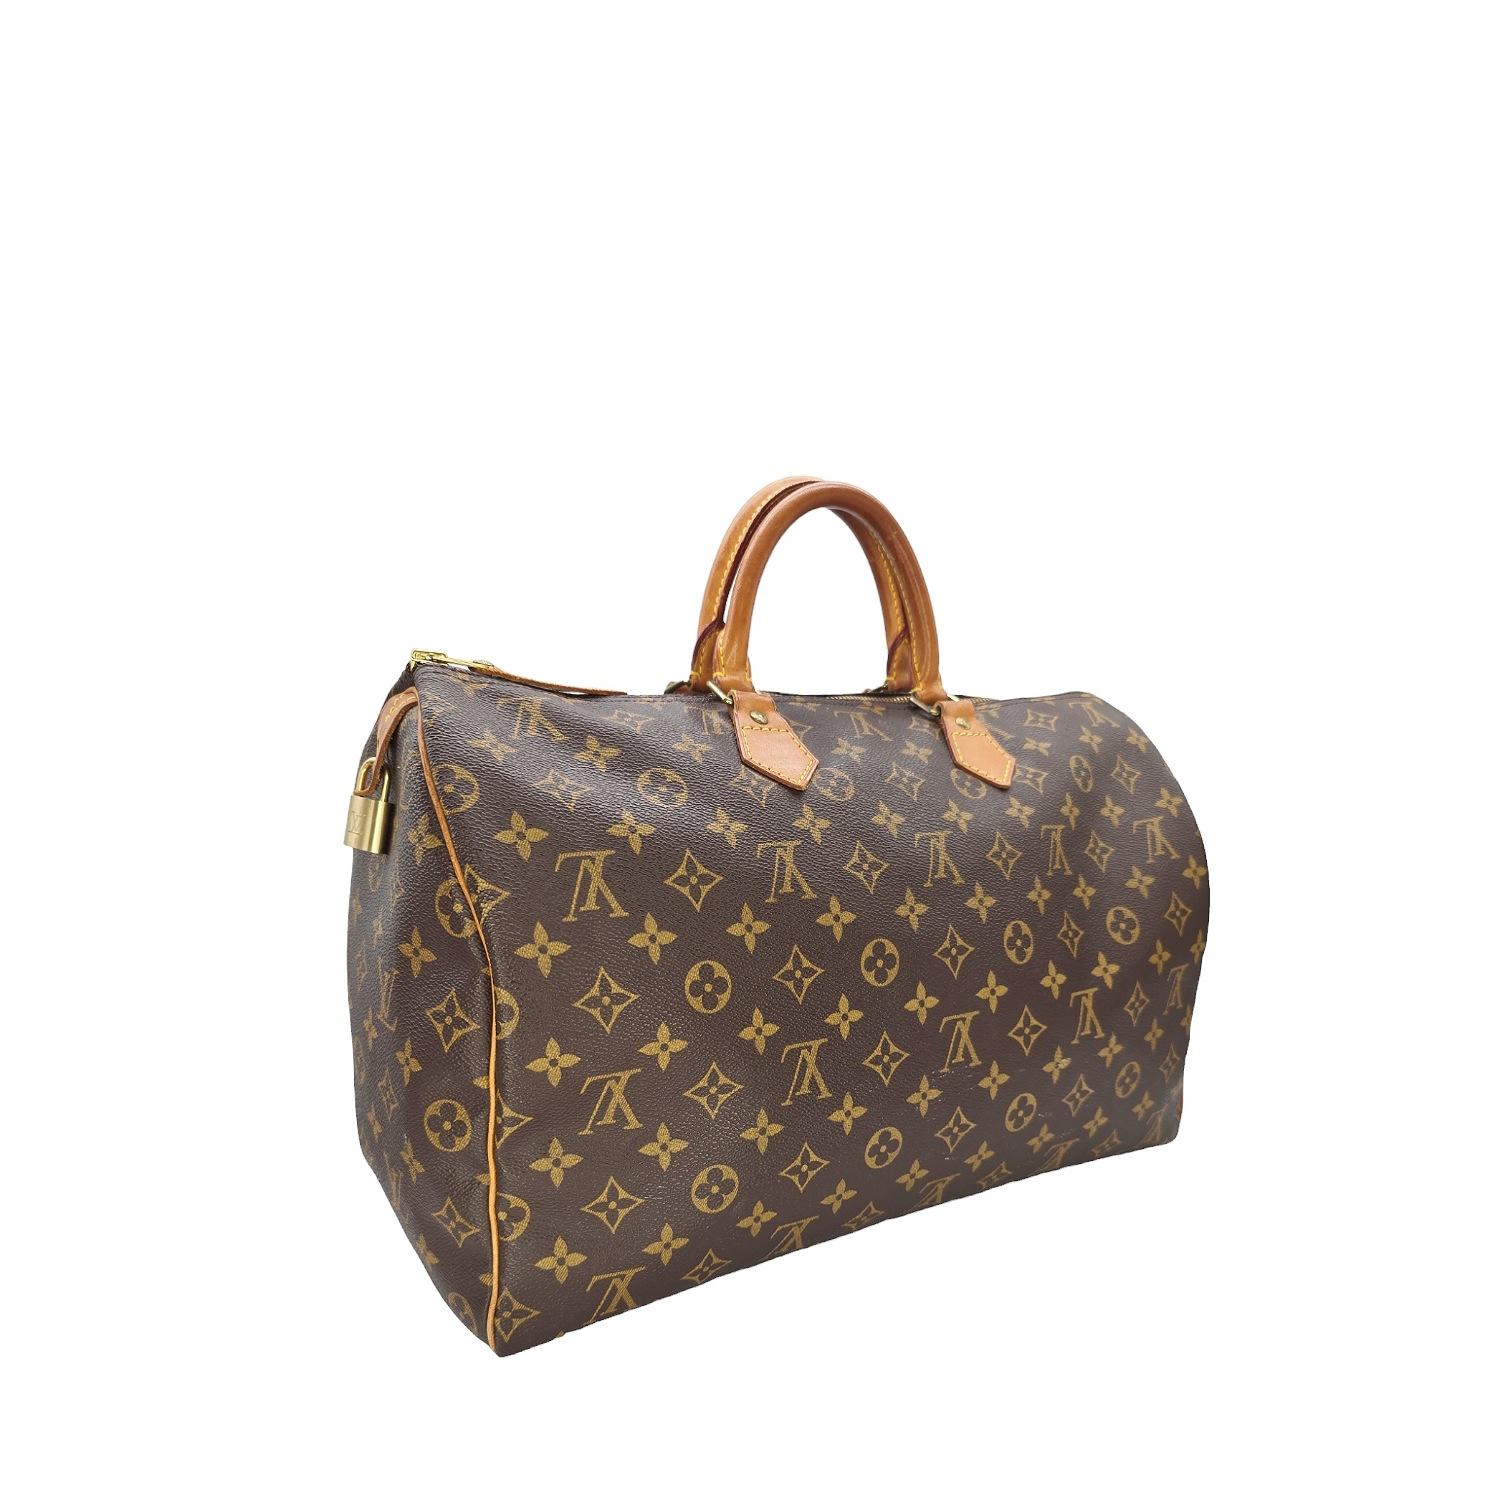 Louis Vuitton Vintage Monogram Speedy 40 Bag In Good Condition For Sale In Scottsdale, AZ